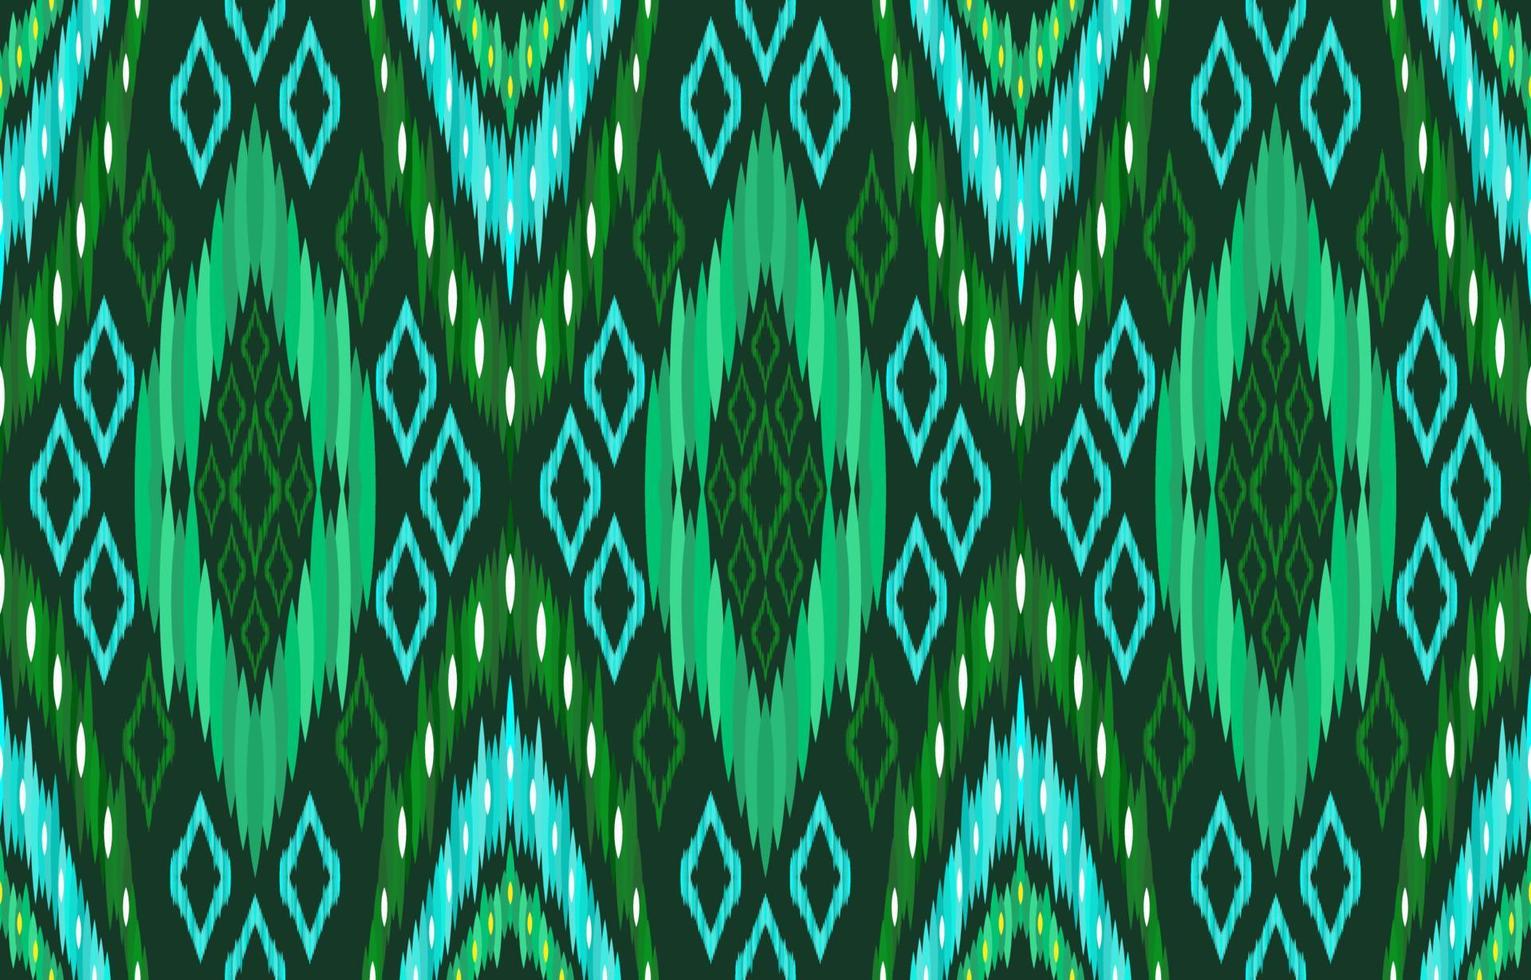 padrões de ikat verdes. estilo retrô vintage tribal geométrico. tecido étnico ikat sem costura padrão. ilustração em vetor impressão asteca ikat navajo indiano. design para pano de fundo textura tecido vestuário têxtil.